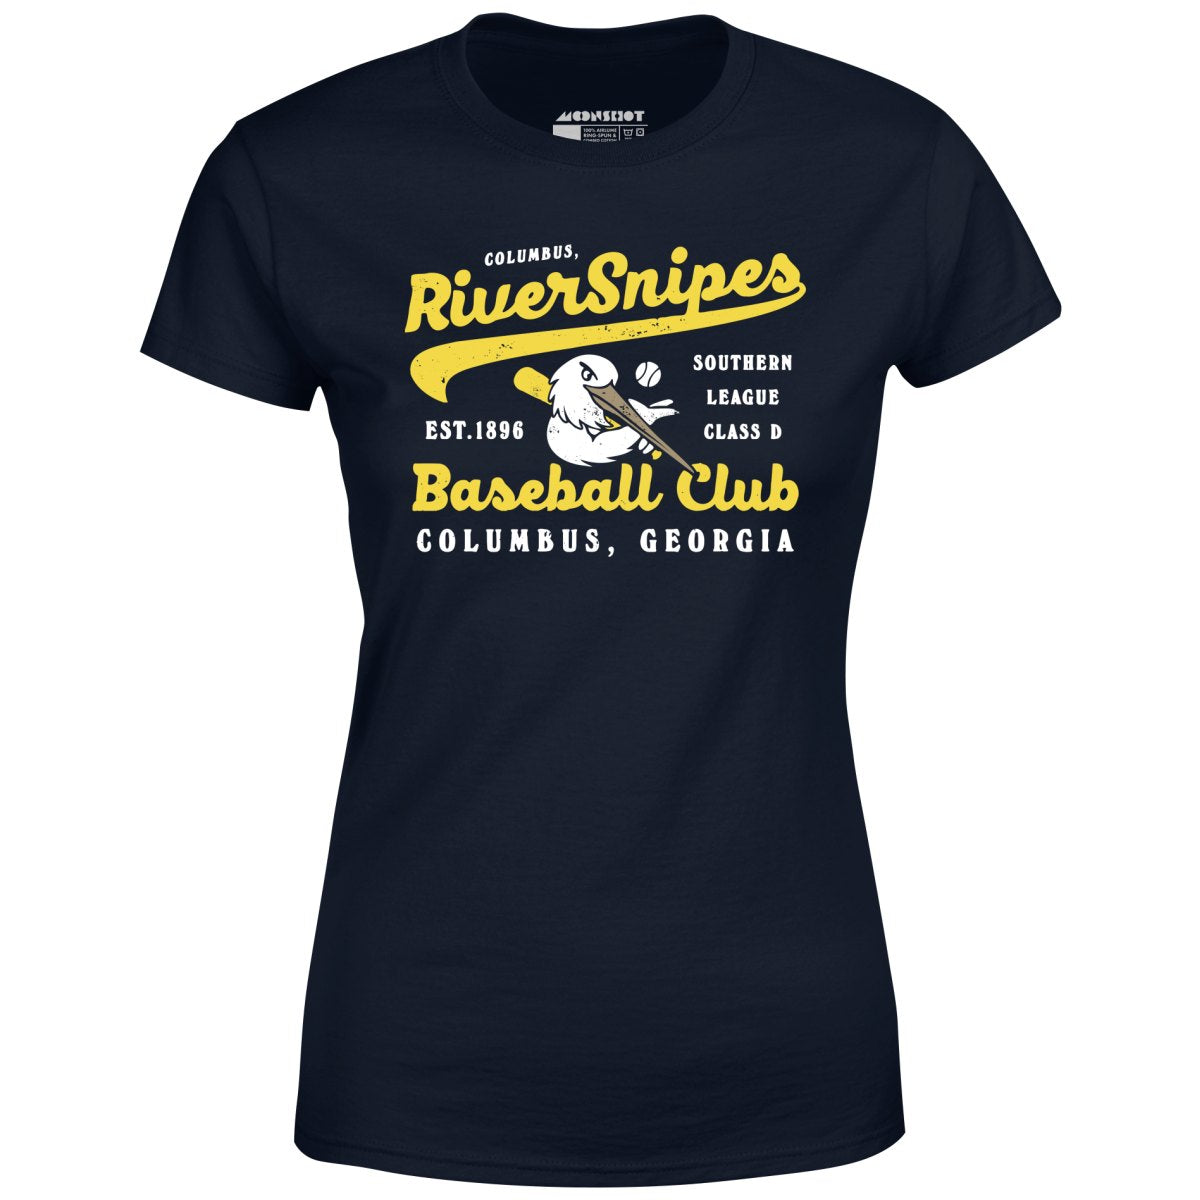 Columbus River Snipes - Georgia - Vintage Defunct Baseball Teams - Women's T-Shirt